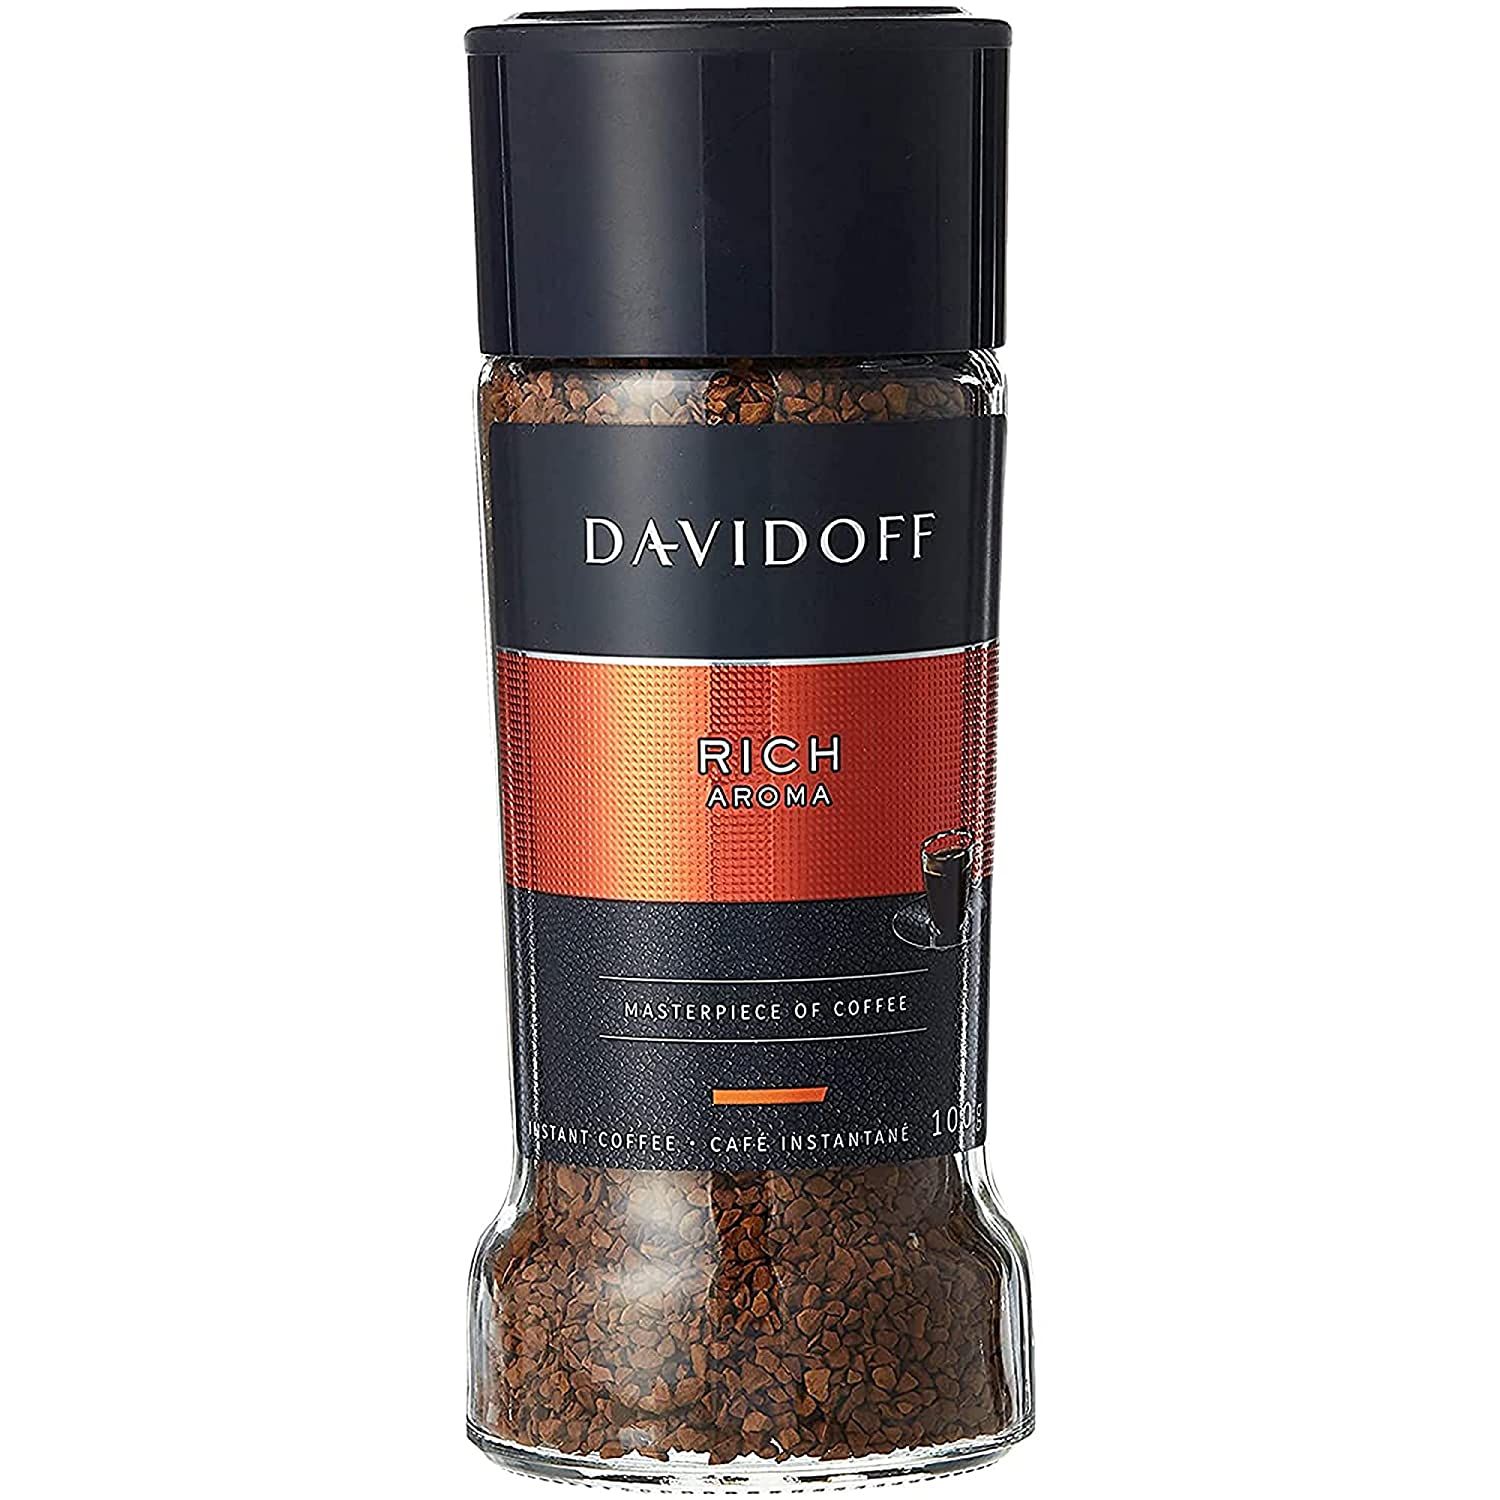 Davidoff Cafe Instant Coffee Jar Rich Aroma Image